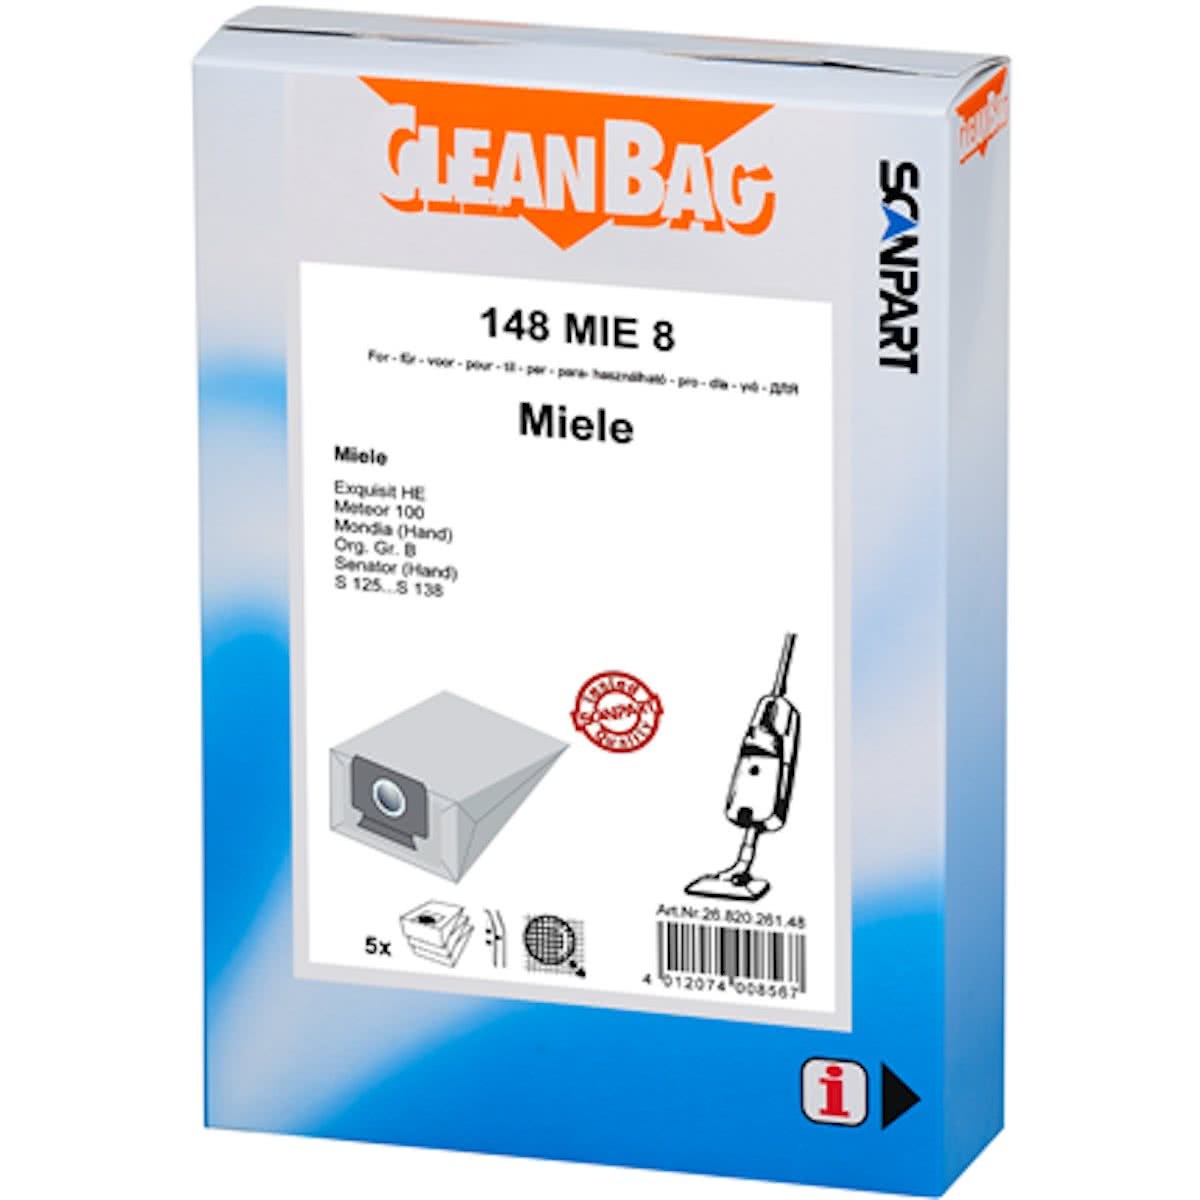 Cleanbag 148 MIE 8